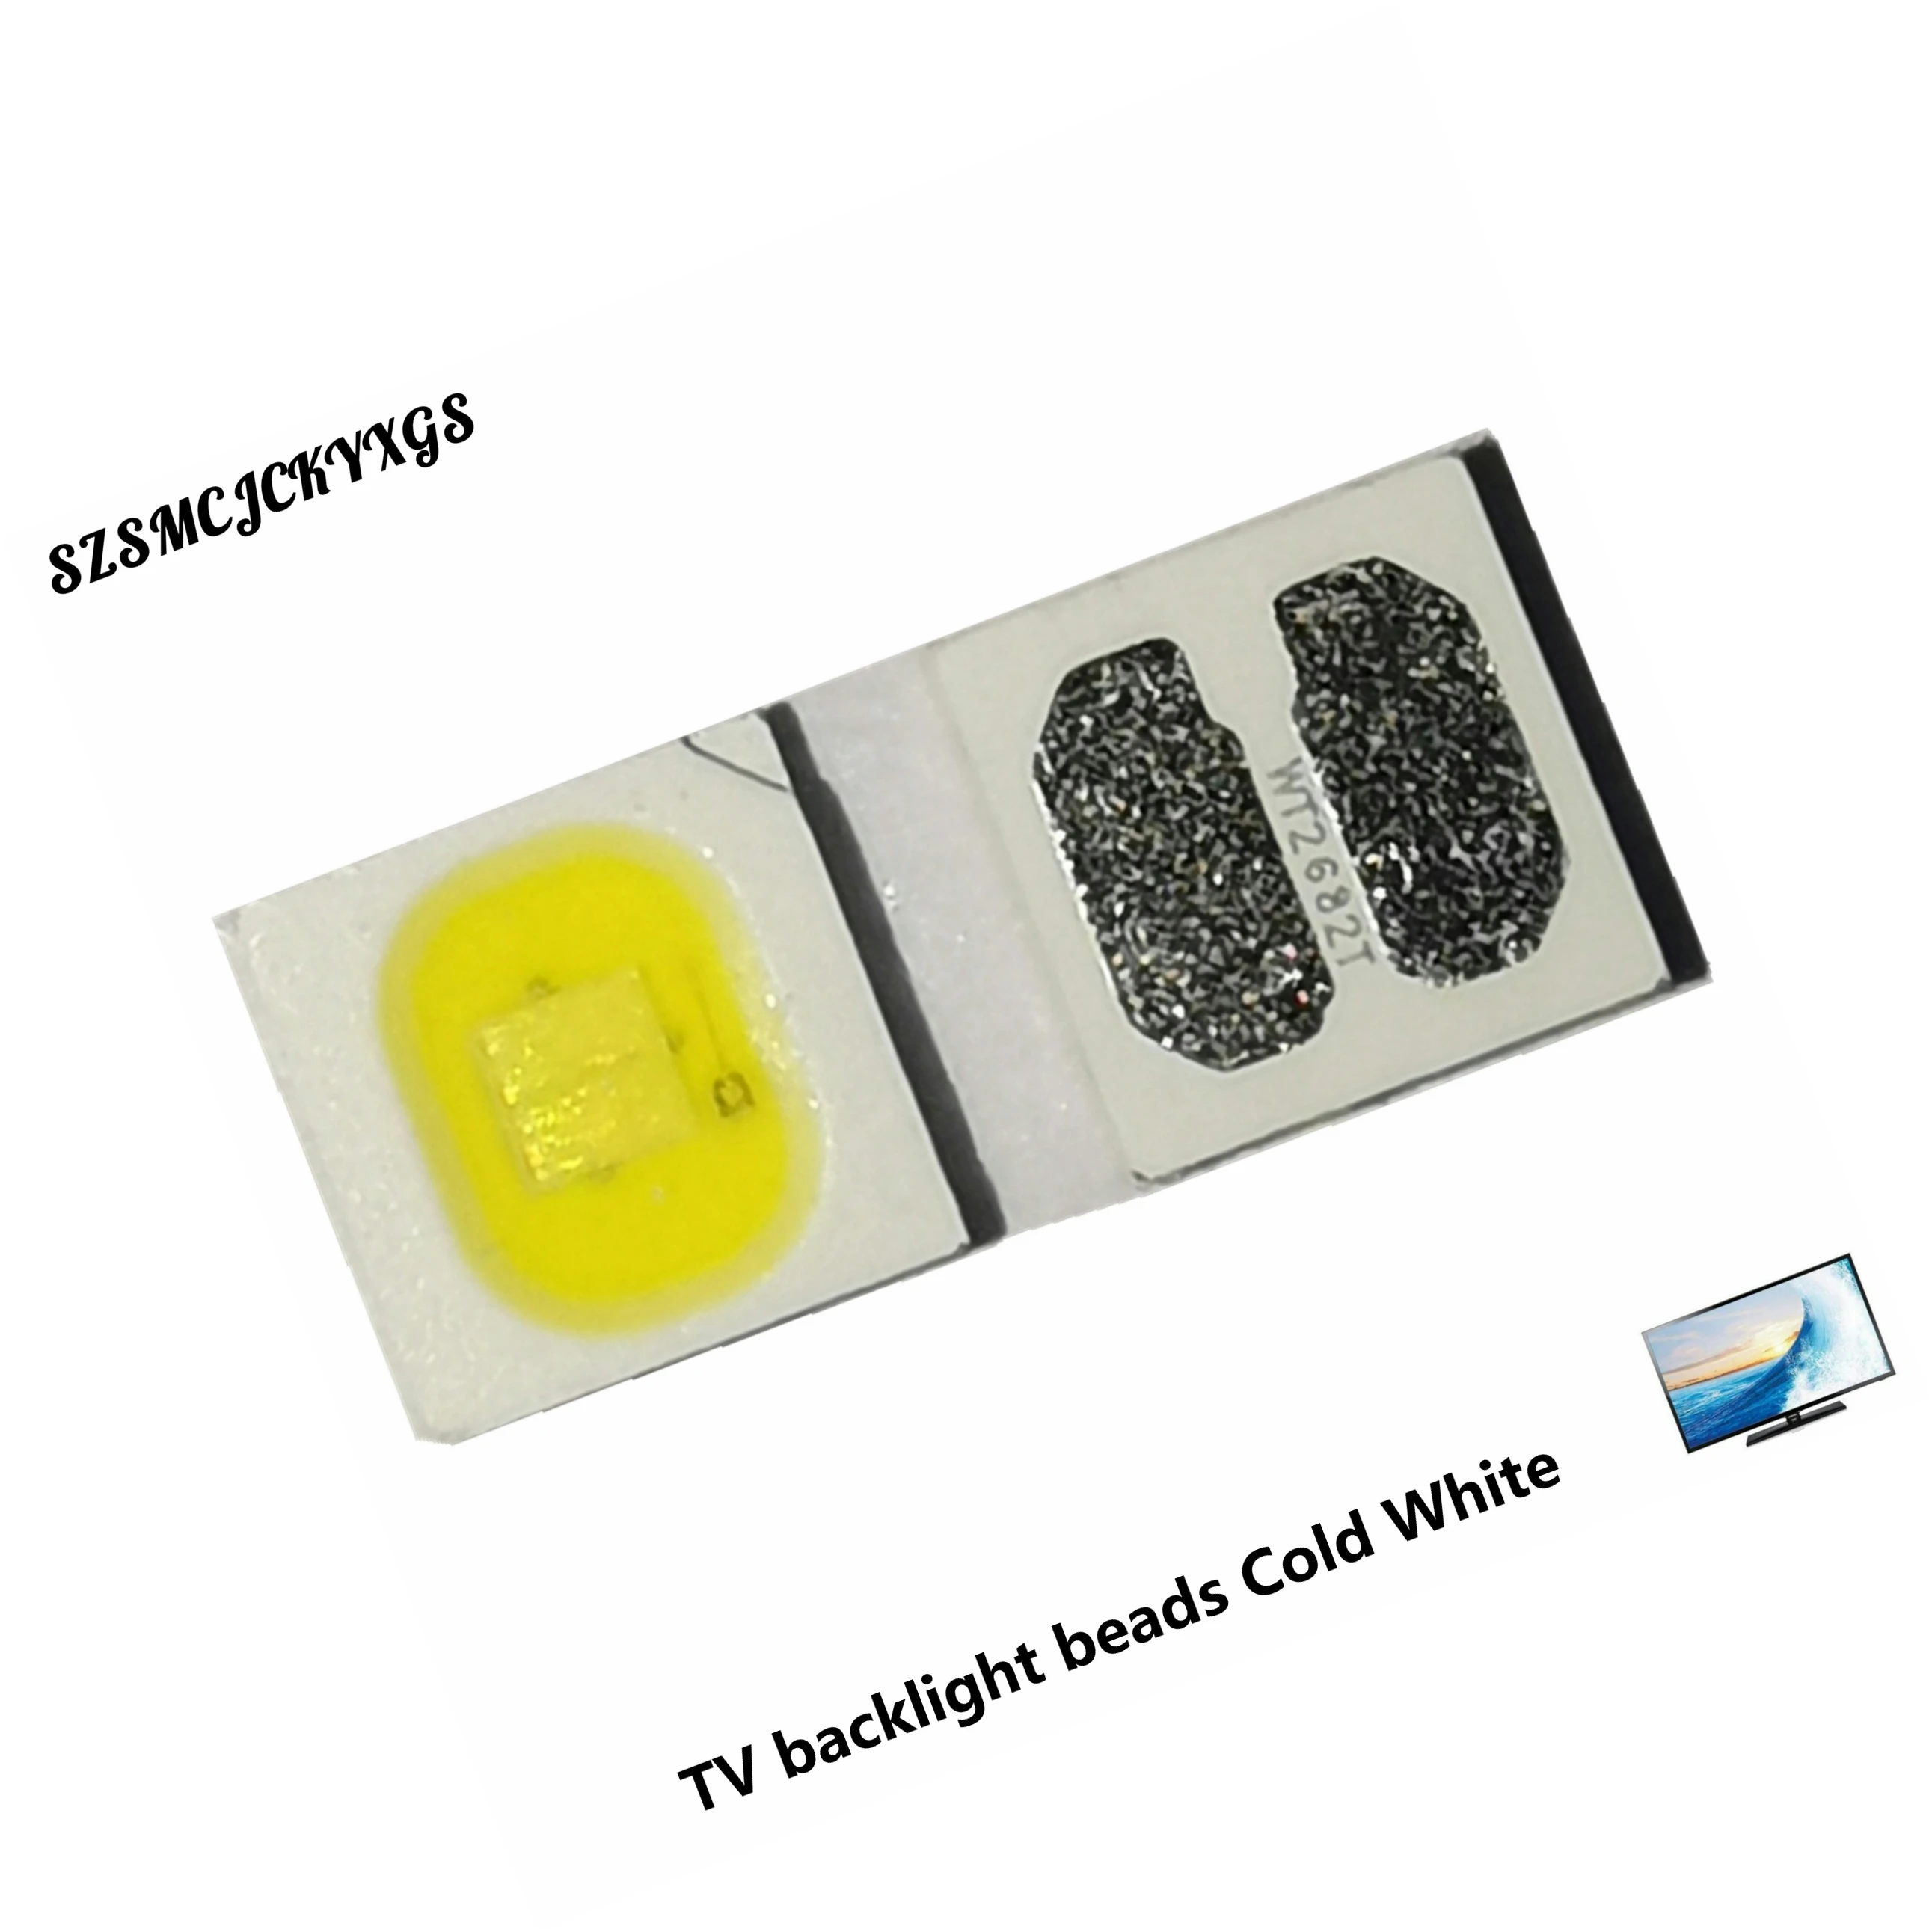 

200pcs Lot Original FOR 3030 6V 1-Chip SMD LED Beads Cold White 2W Zener diode For TV Backlight Application High Power